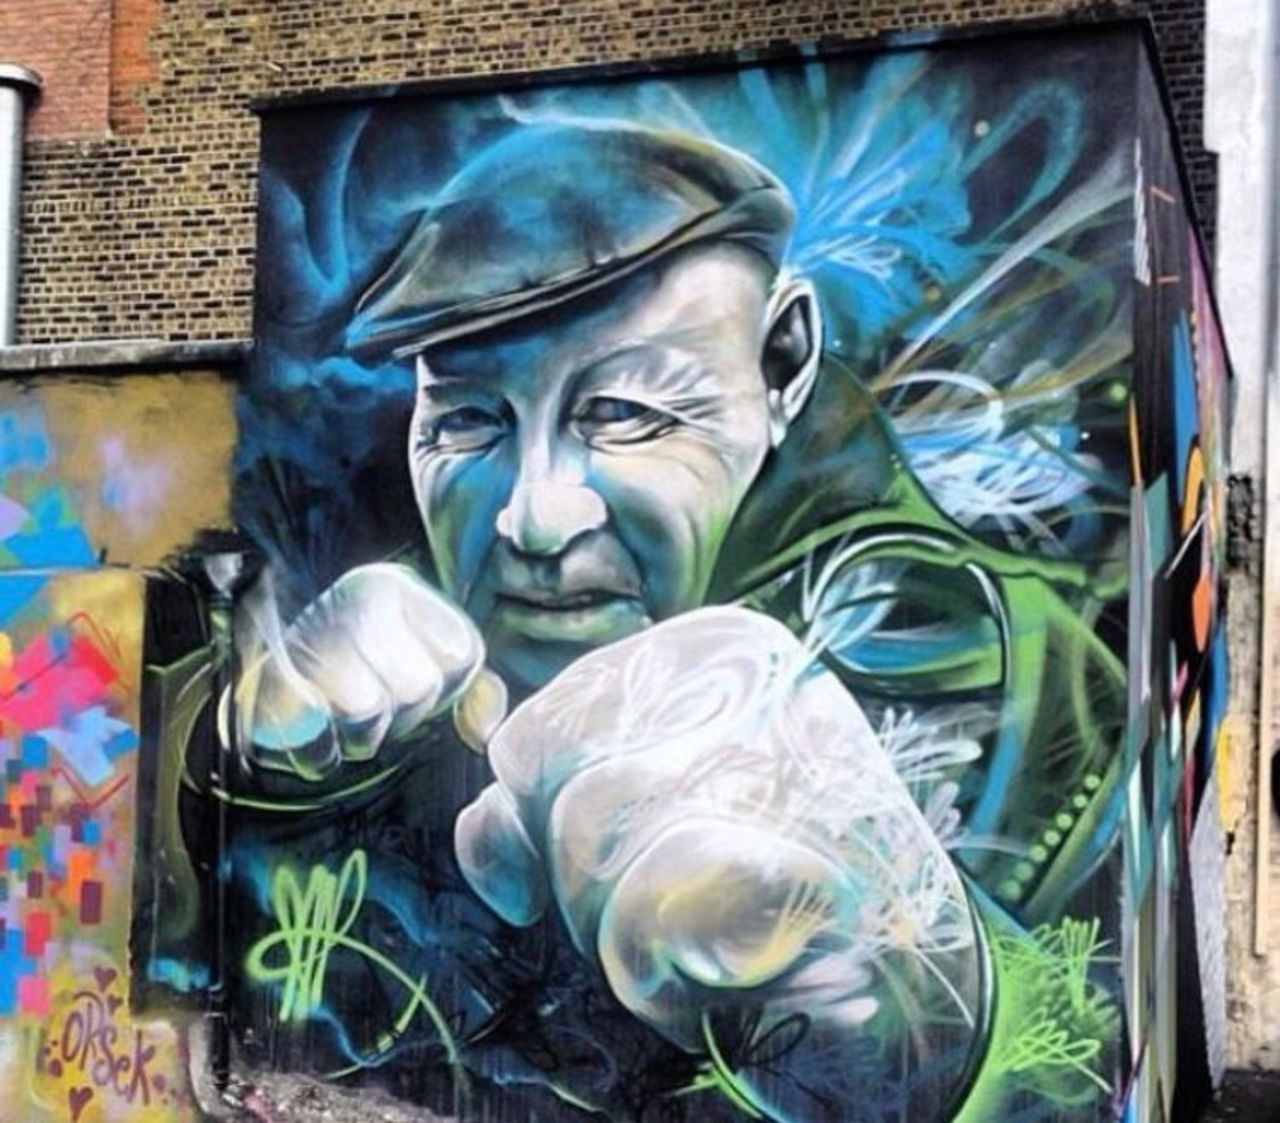 New work by Johnny McKerr Dublin, Ireland #streetart #mural #graffiti #art https://t.co/XfzAcRdF69